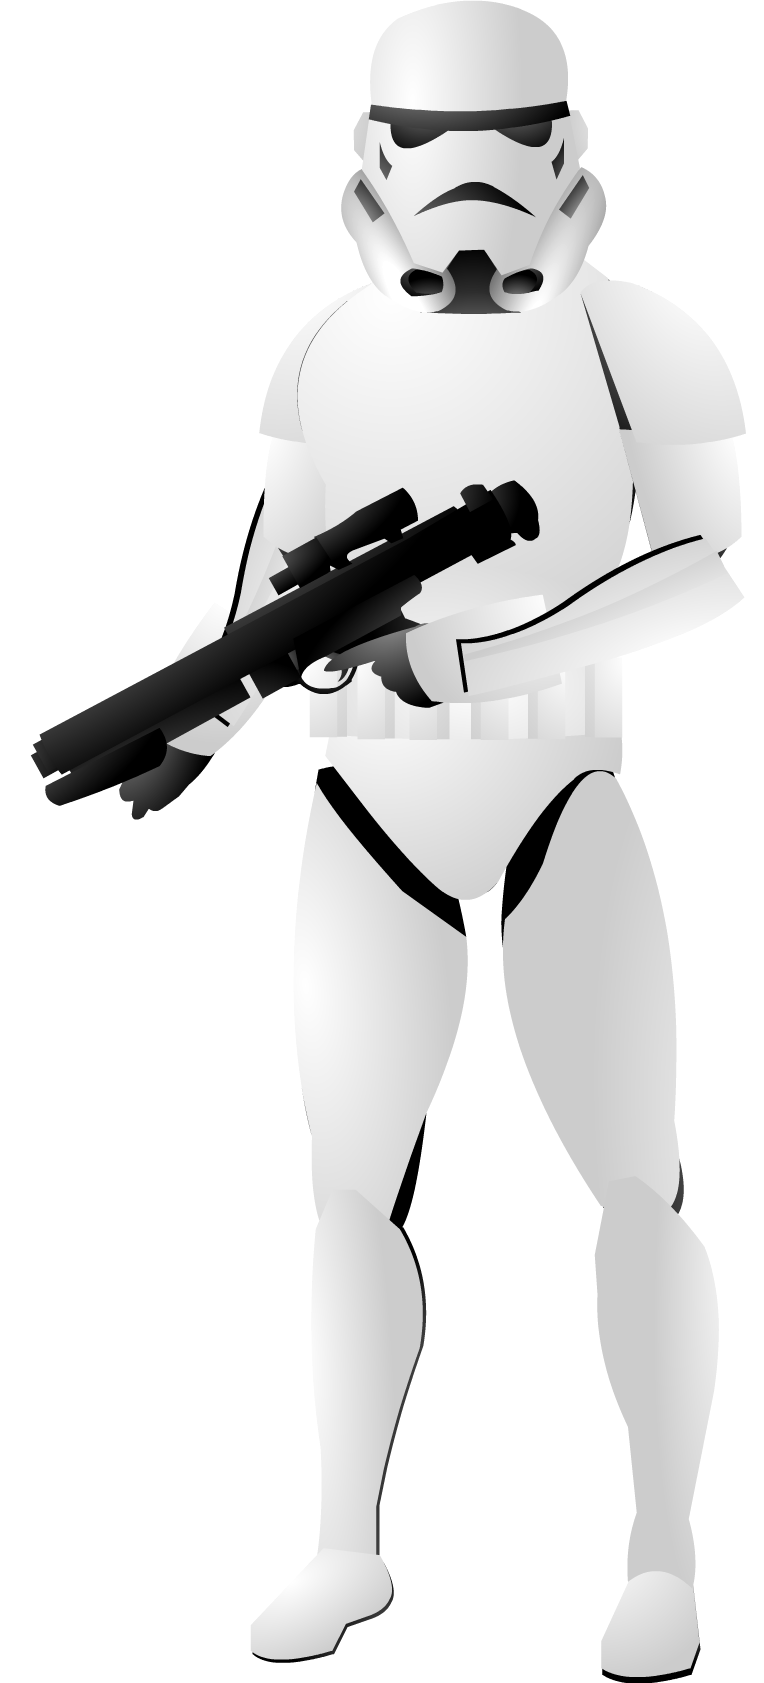 Imagem PNG de primeira ordem do Stormtrooper